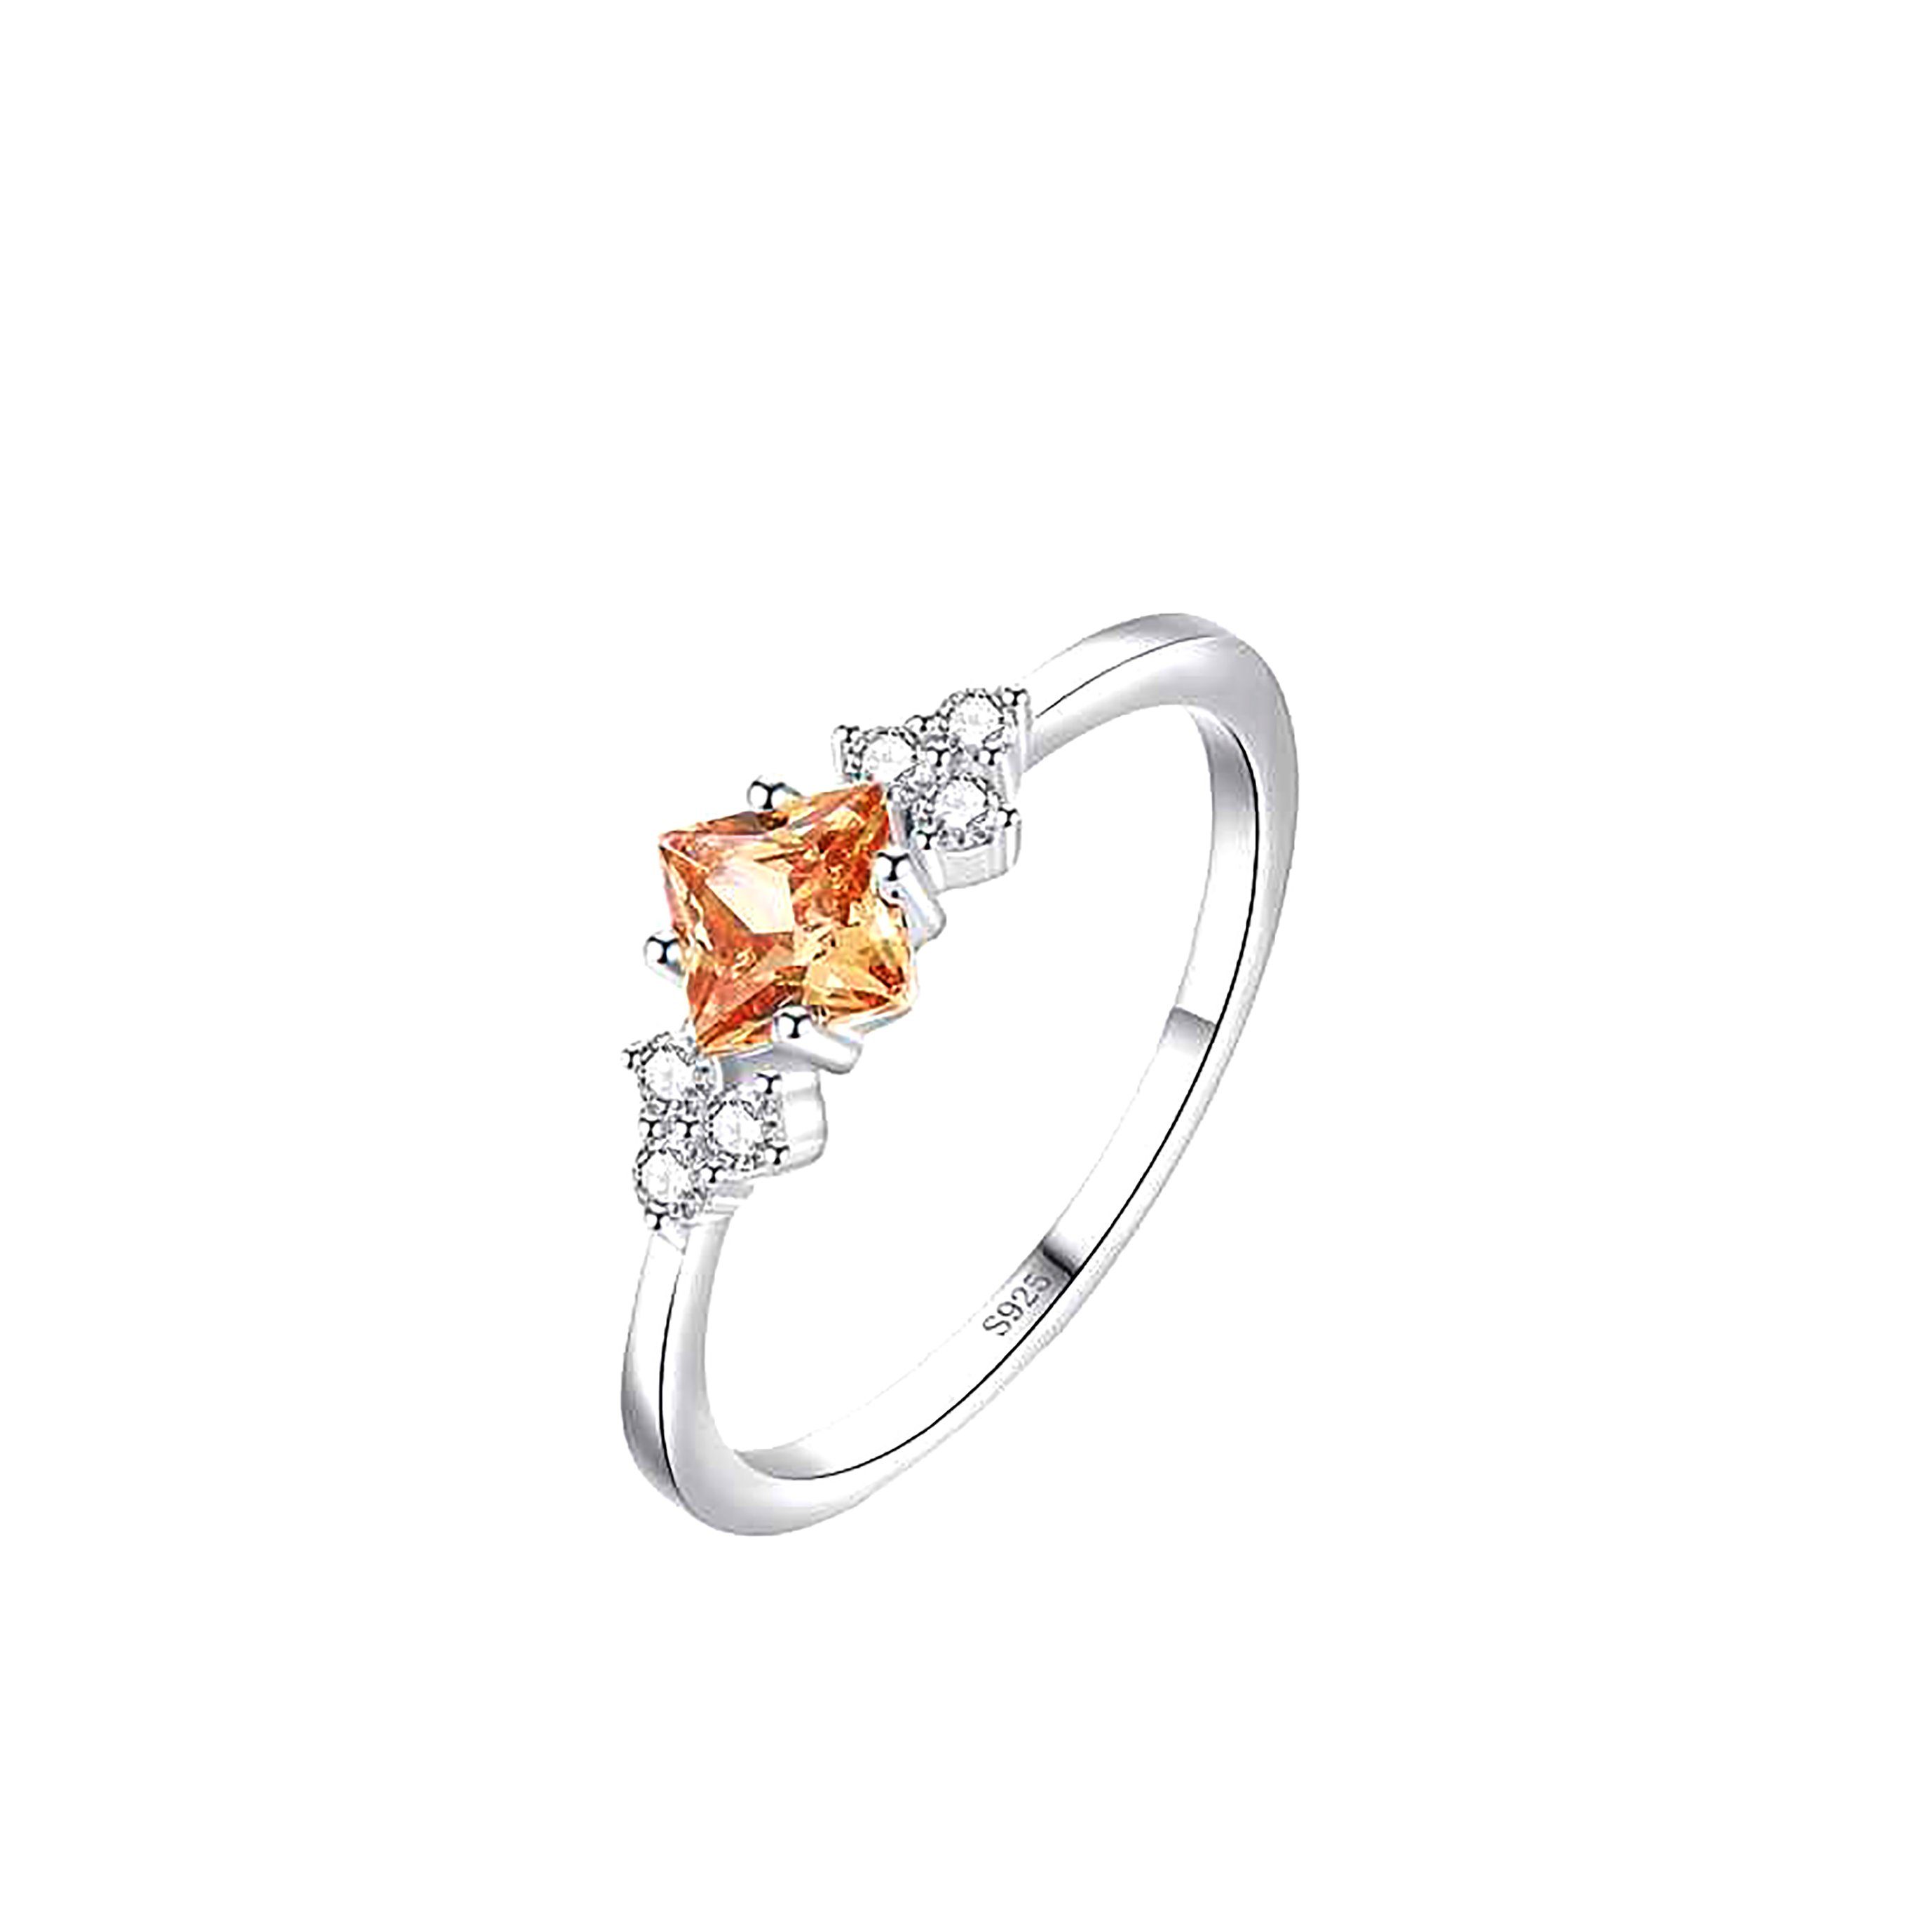 Ring Fingerring für Frauen Kreativer Zirkonia Tapferer Ping Sparkle Super Silber